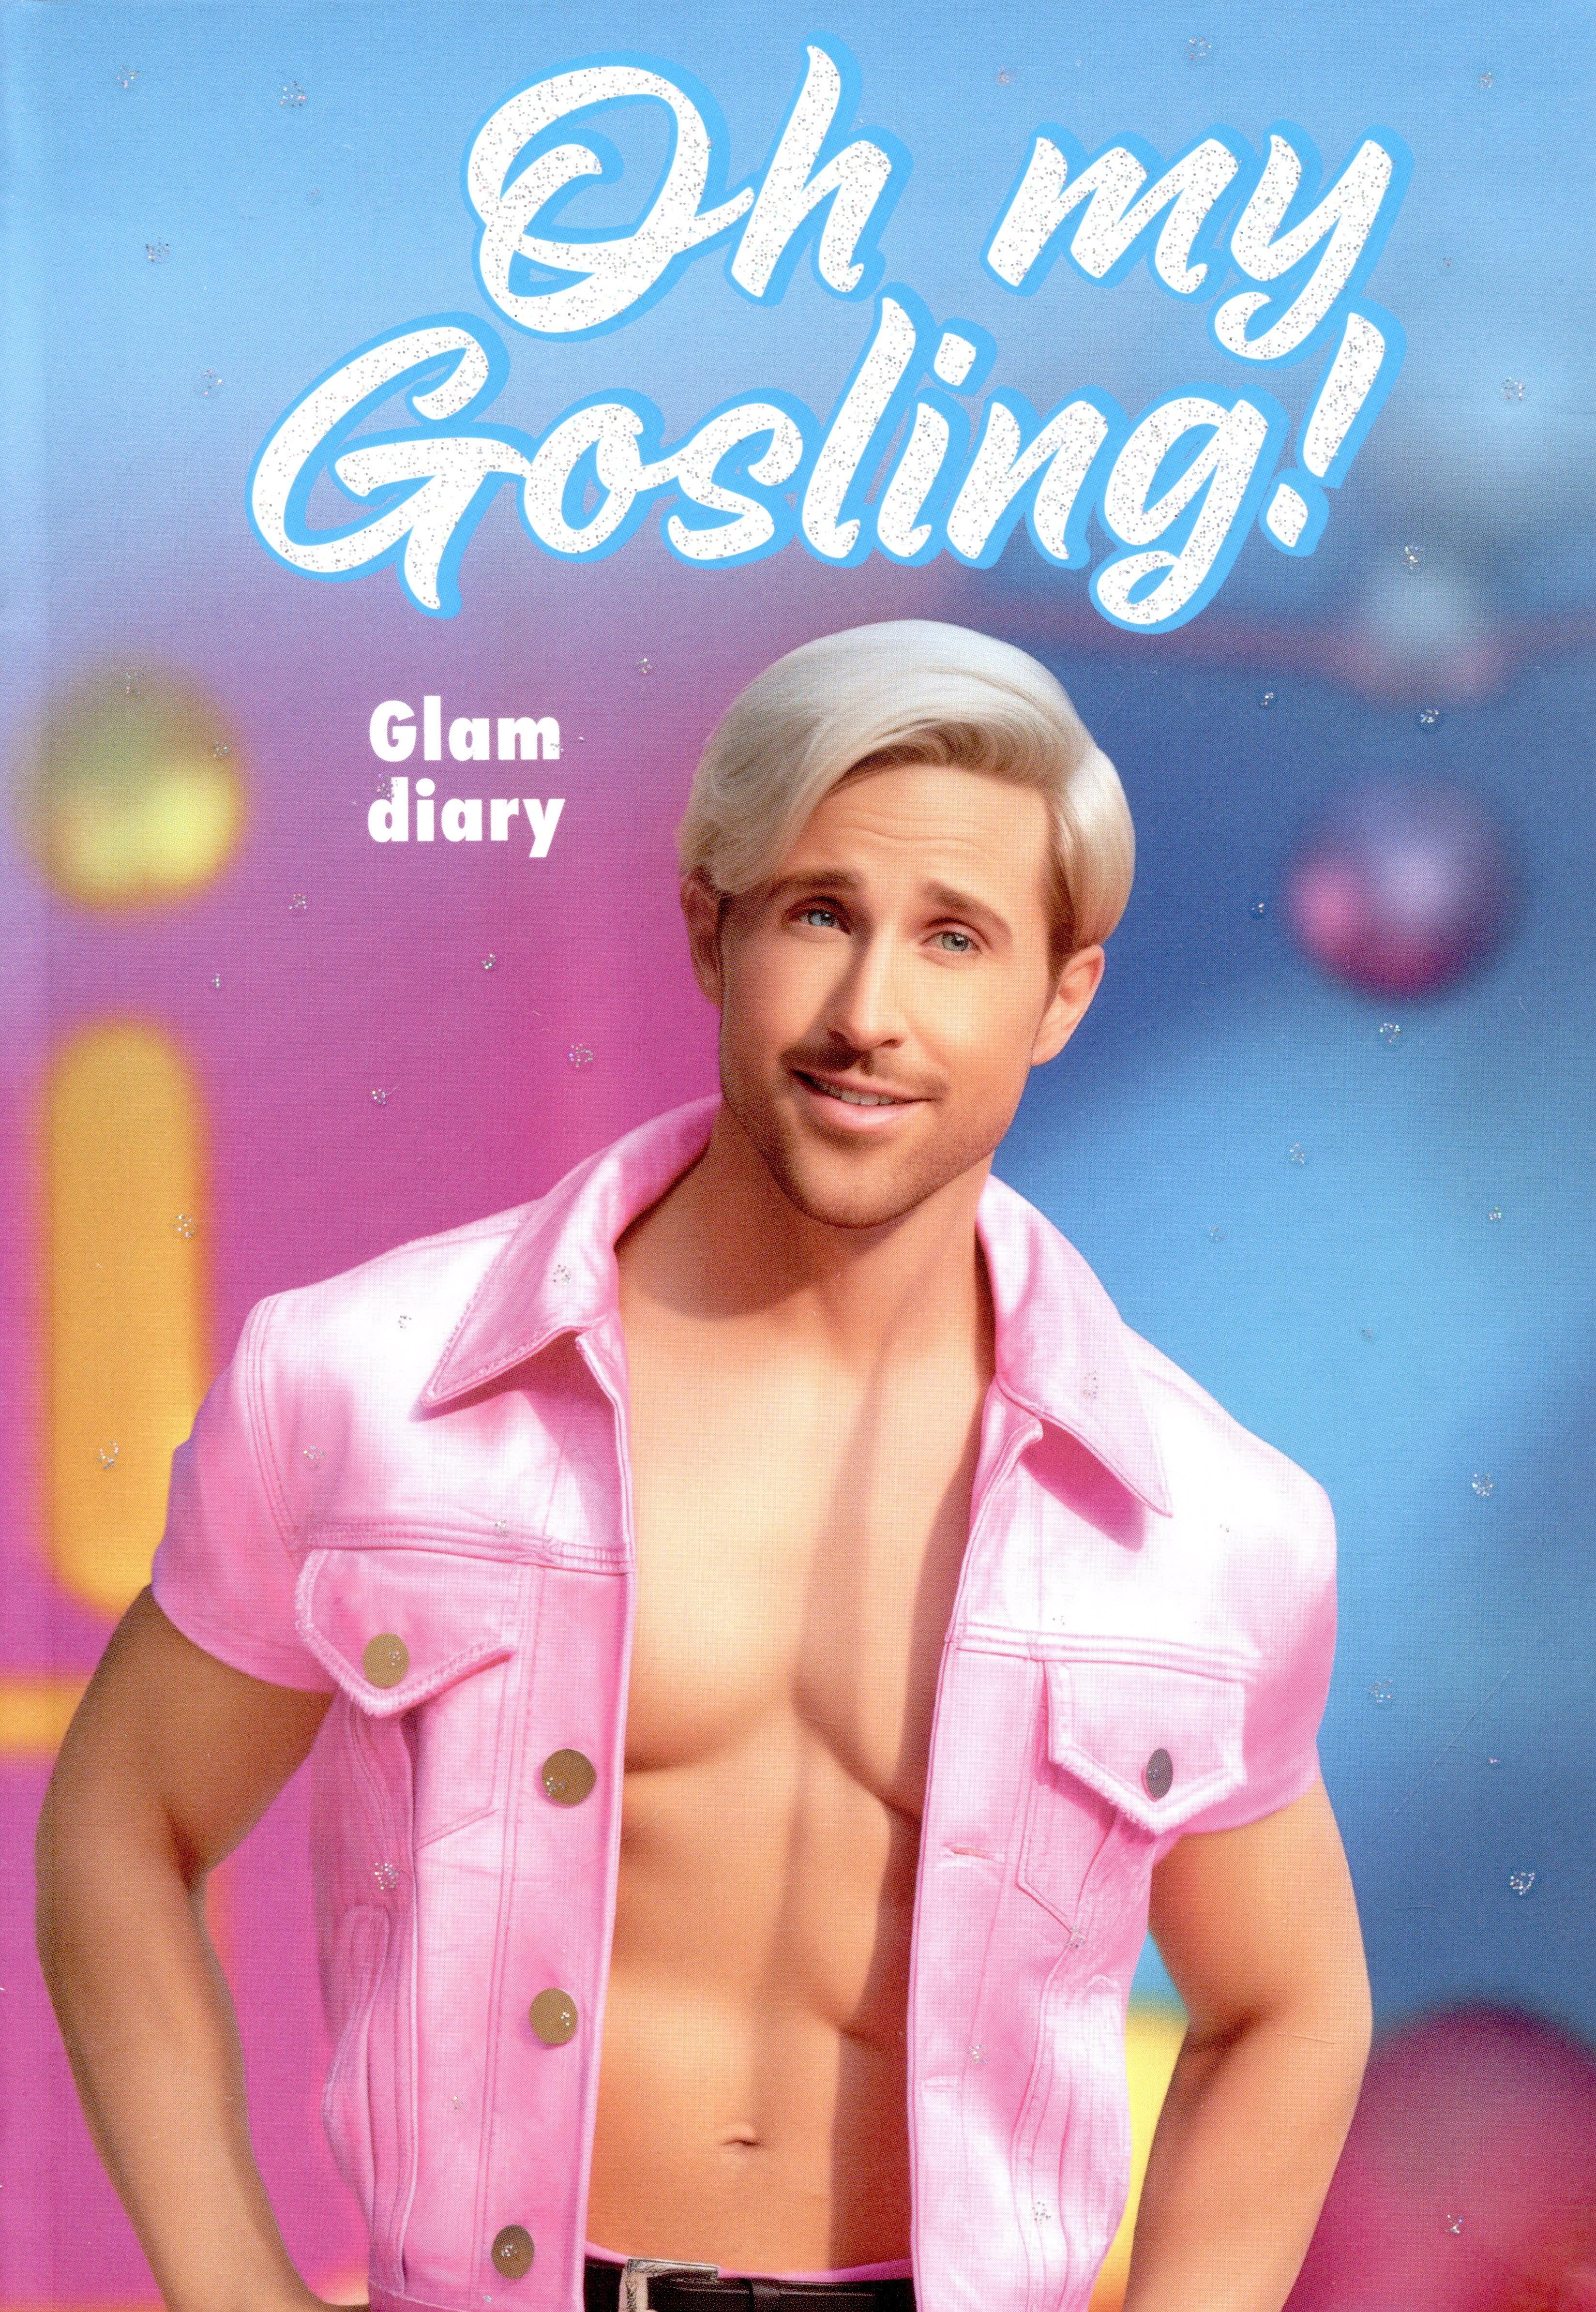    5 64  Oh my Gosling! Glam diary  ..,   